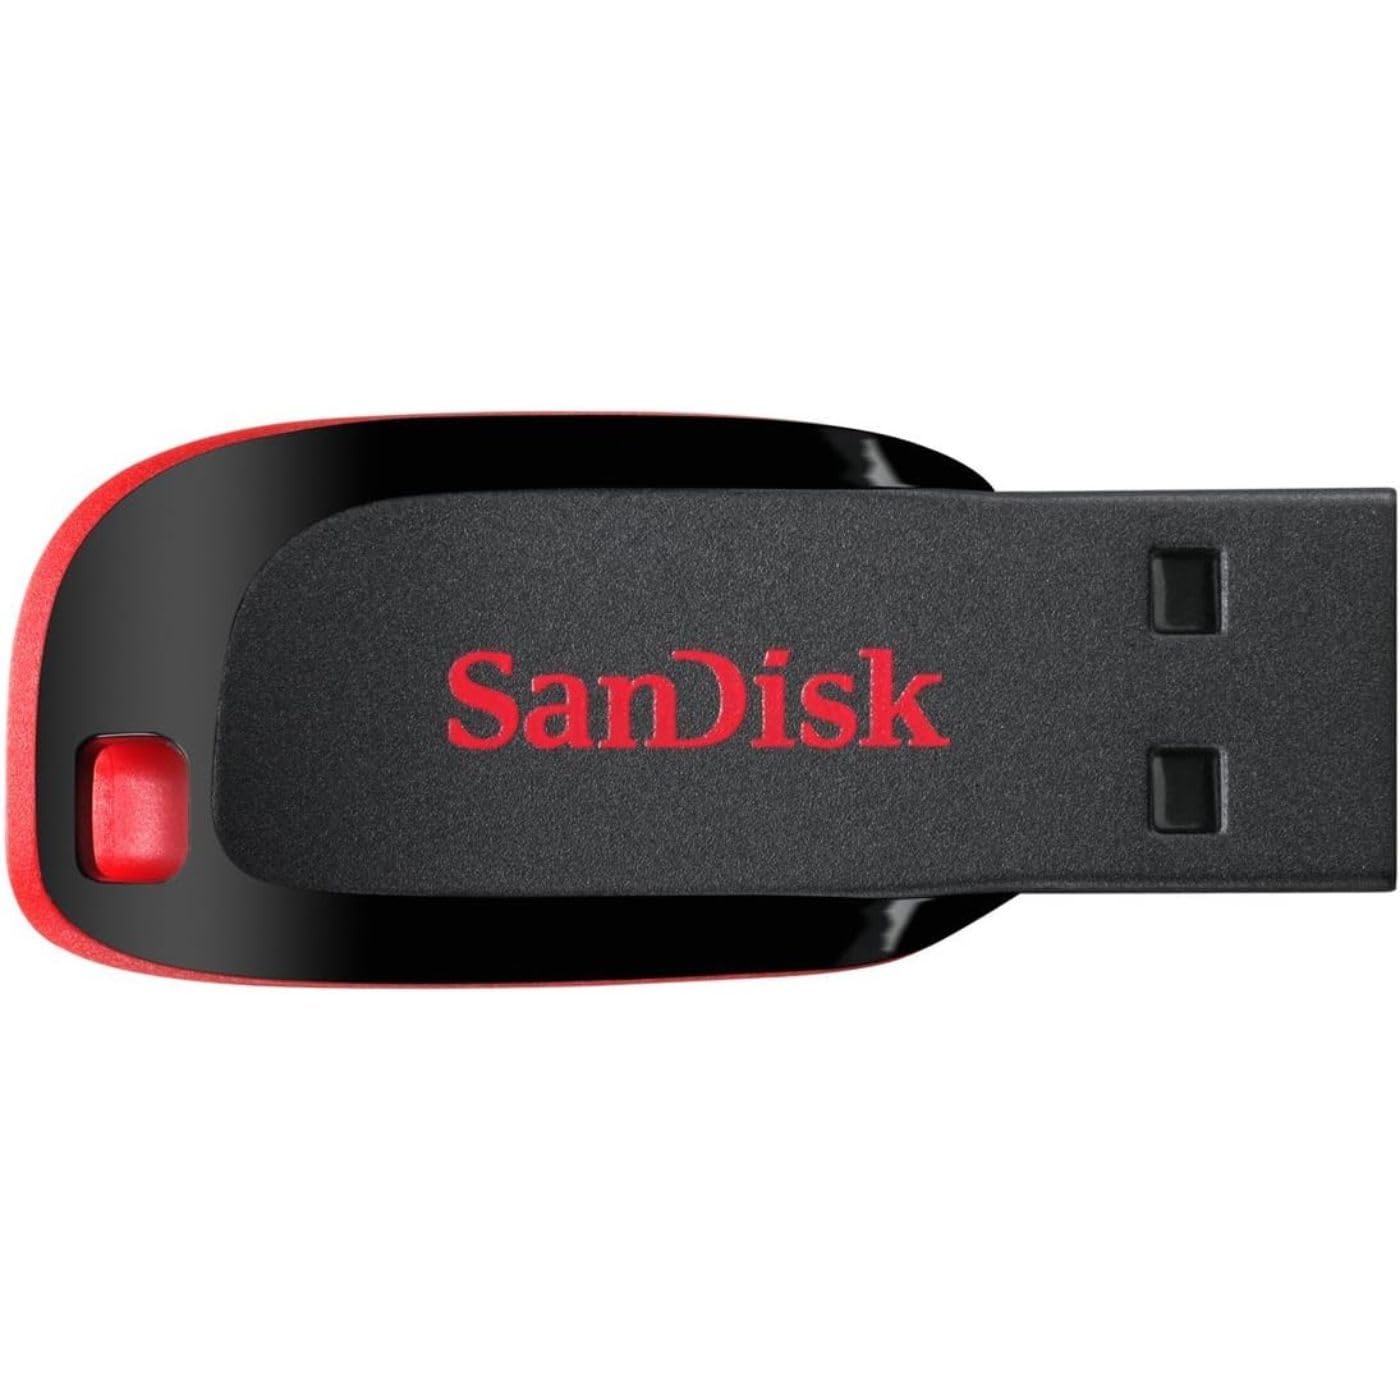  USB SanDisk Flash 16GB